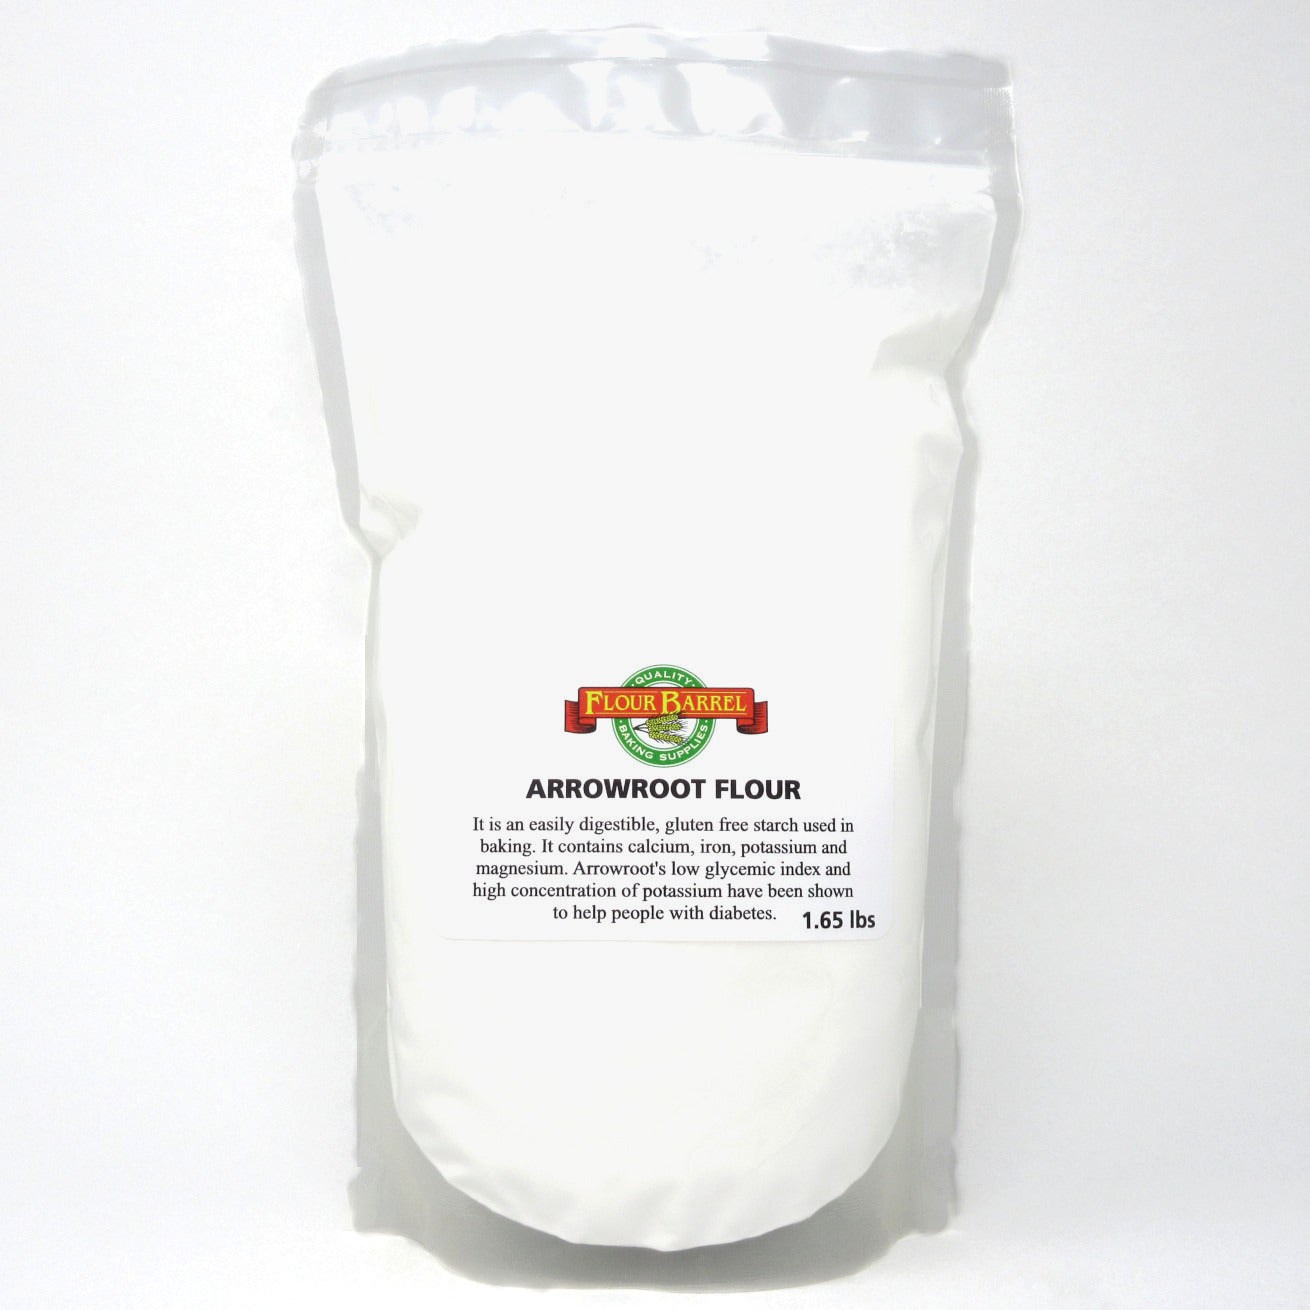 Flour Barrel product image - Arrowroot Flour